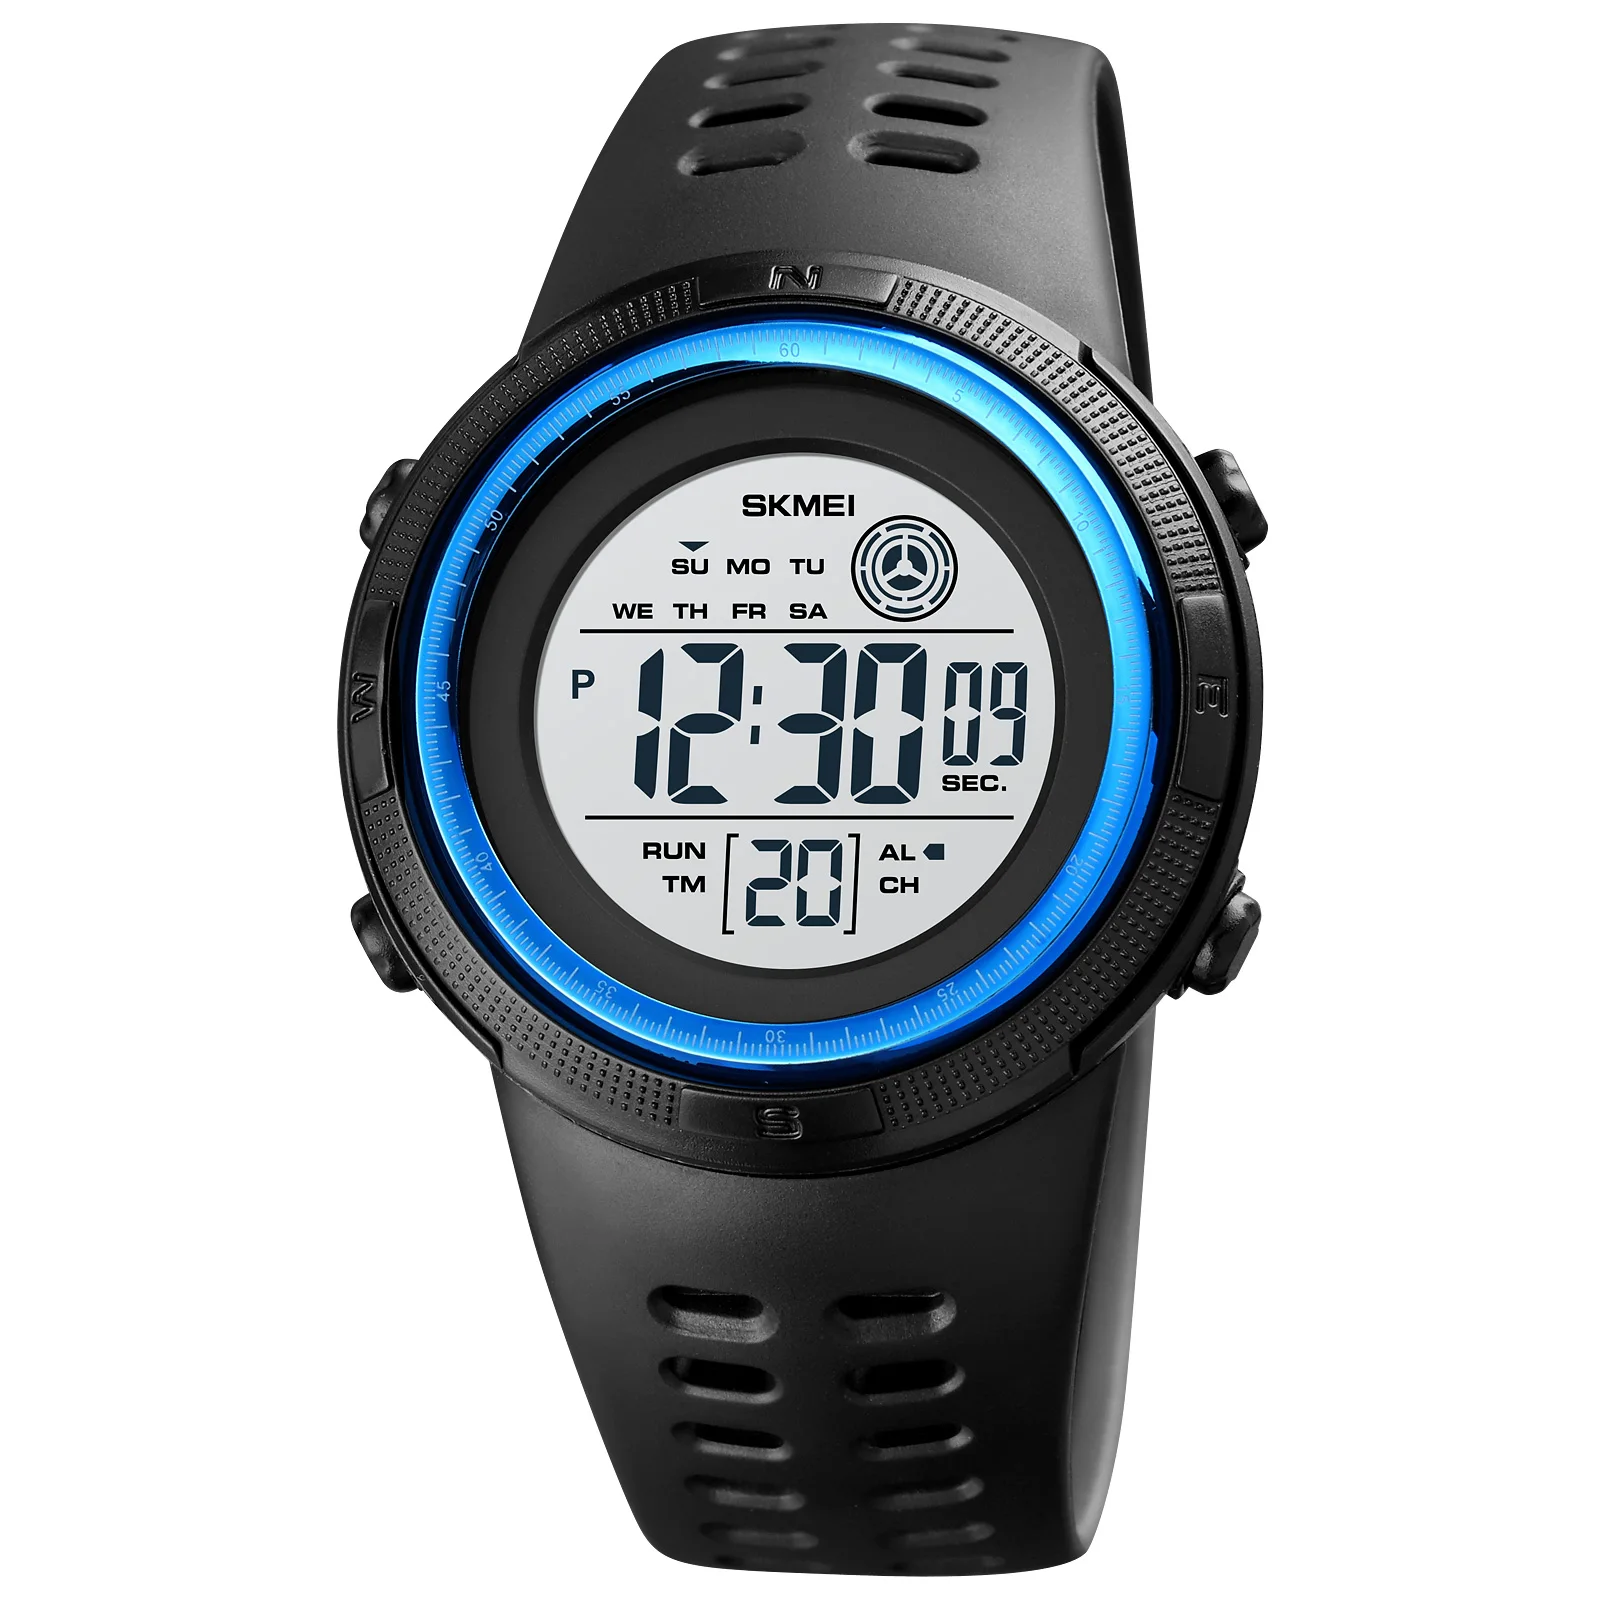 Enlarge Original New Chirldren Watches Top Brand SKMEI Digital Electronic Watch Sport Kids Wristwatch Countdwn Stopwatch Clock For Gift